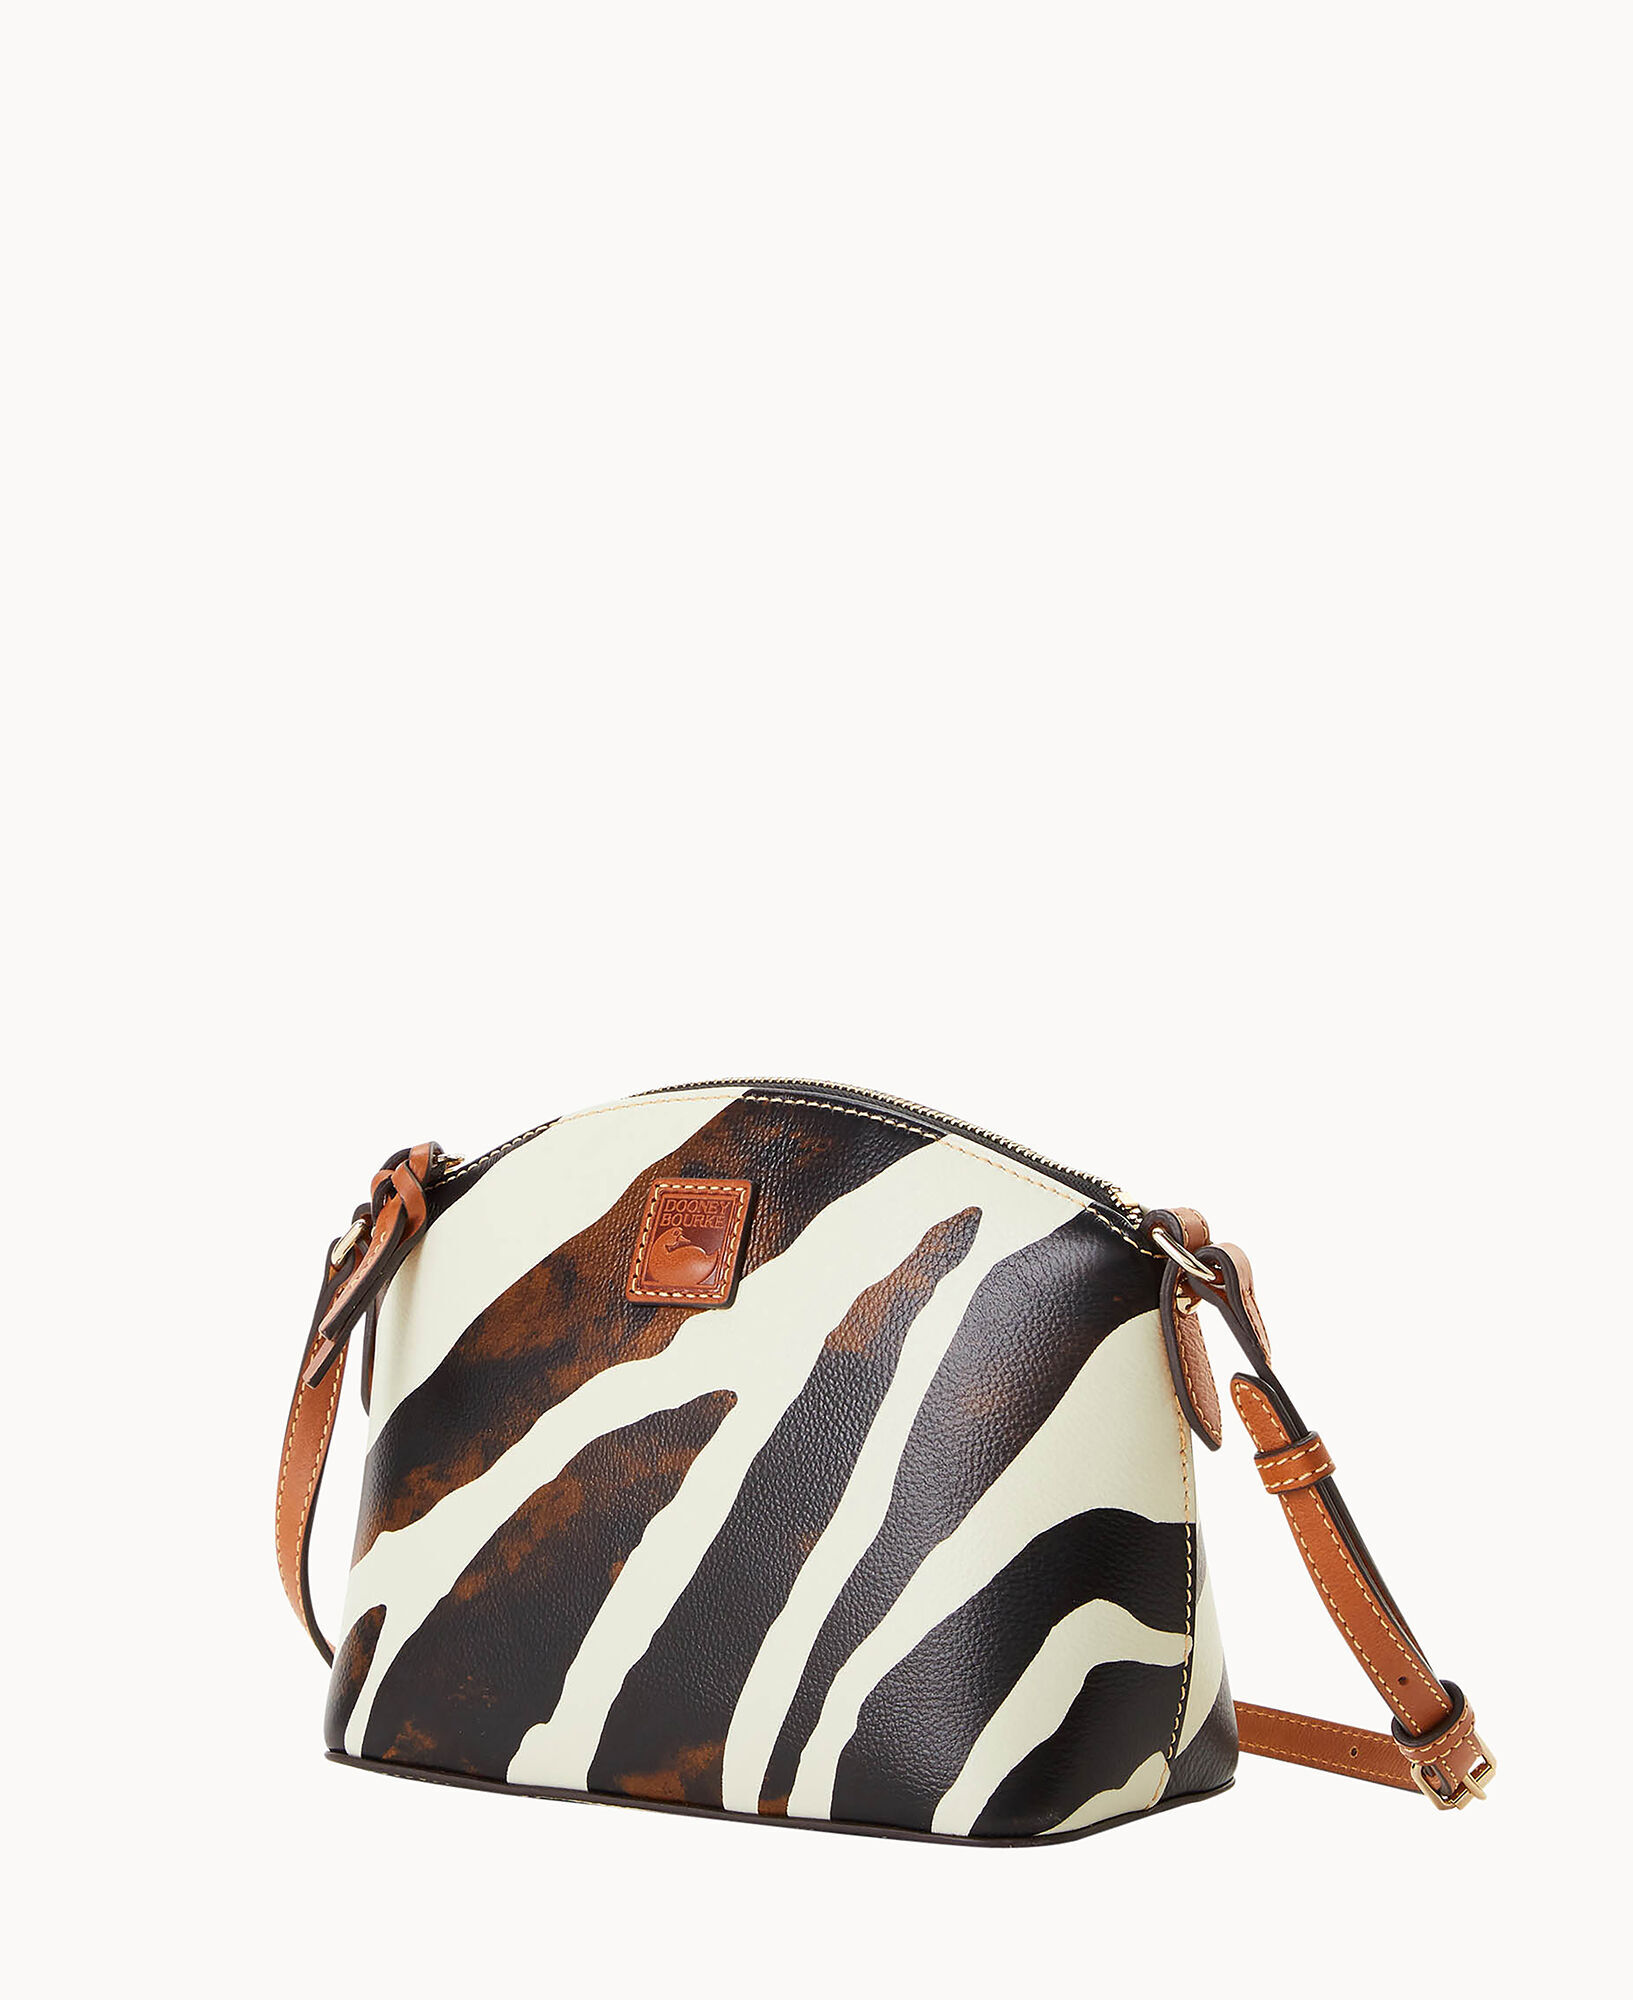 Dooney & Bourke Zebra Printed Domed Satchel Bag